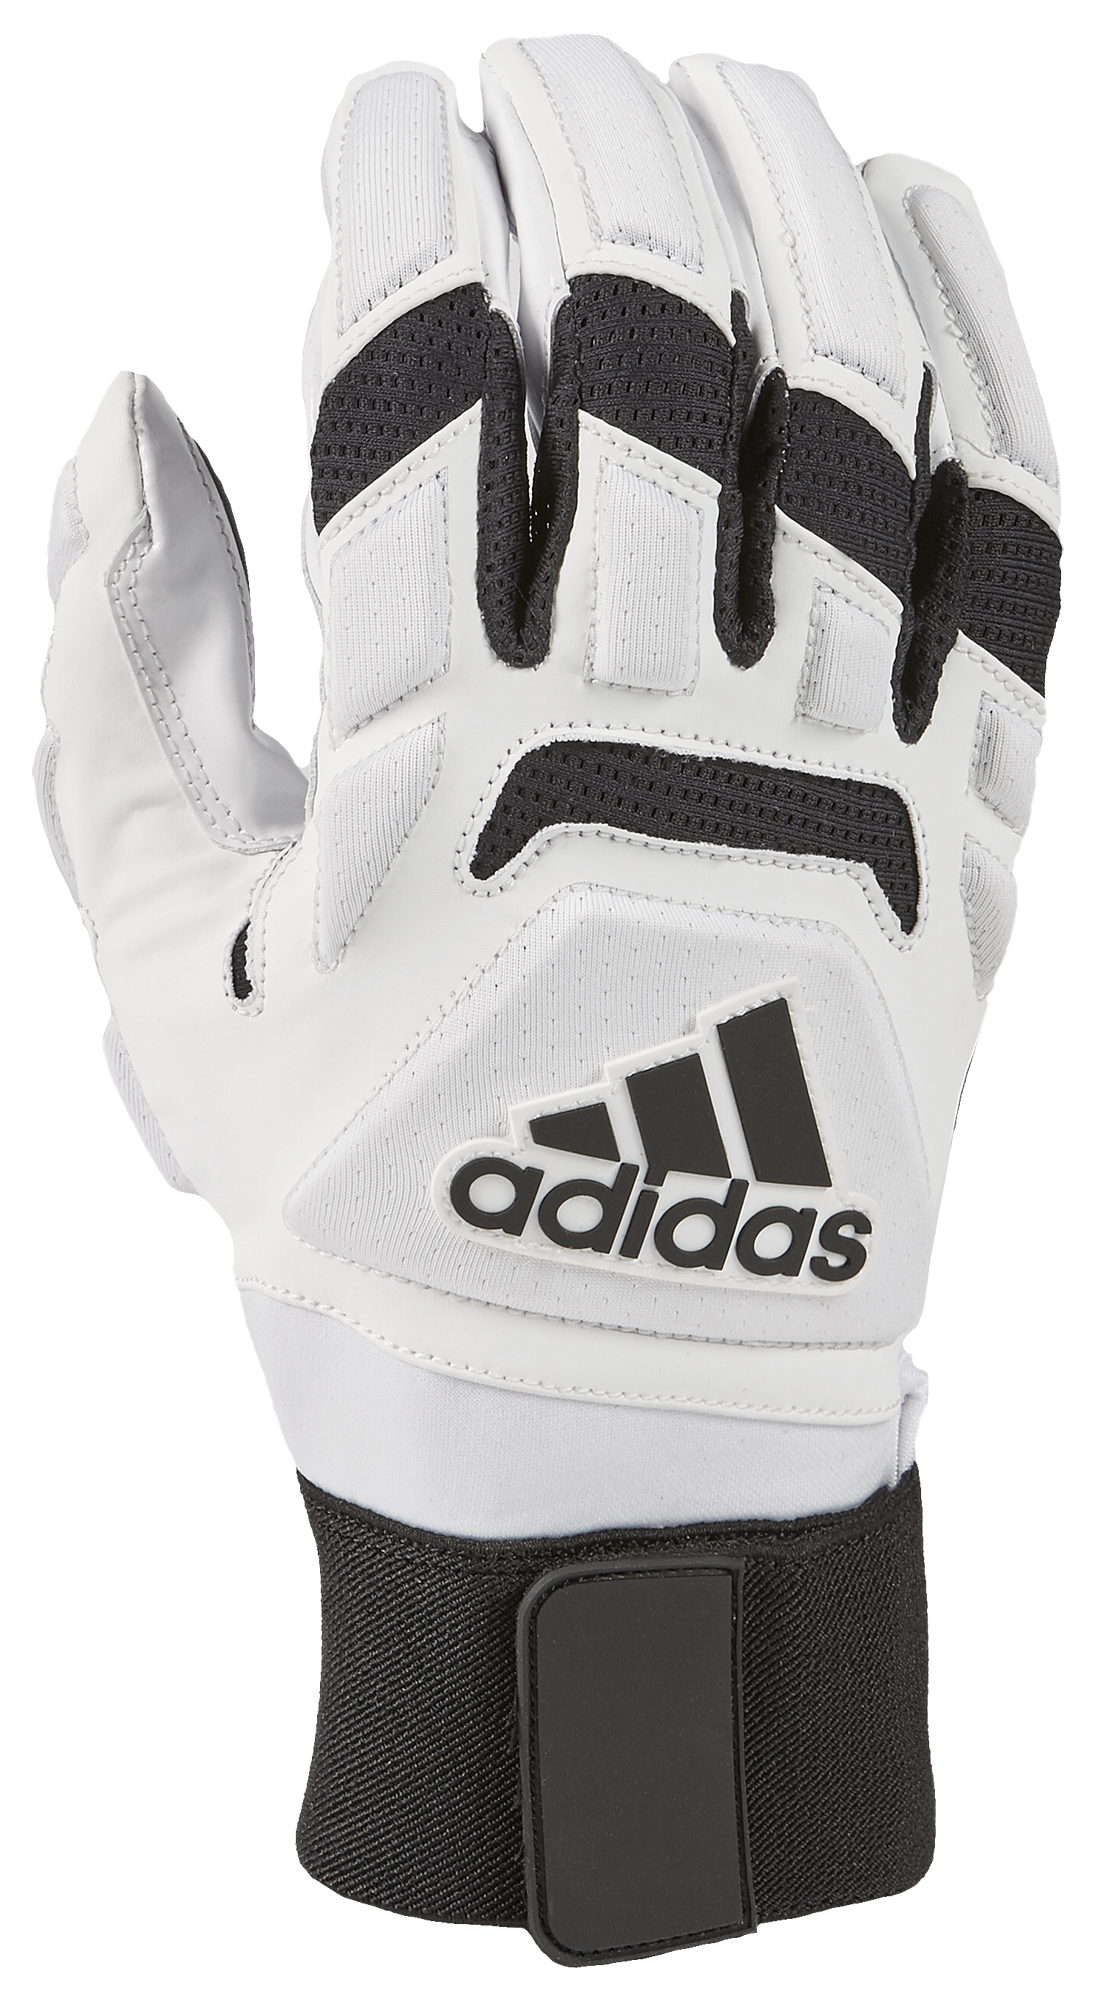 adidas nasty fast football gloves